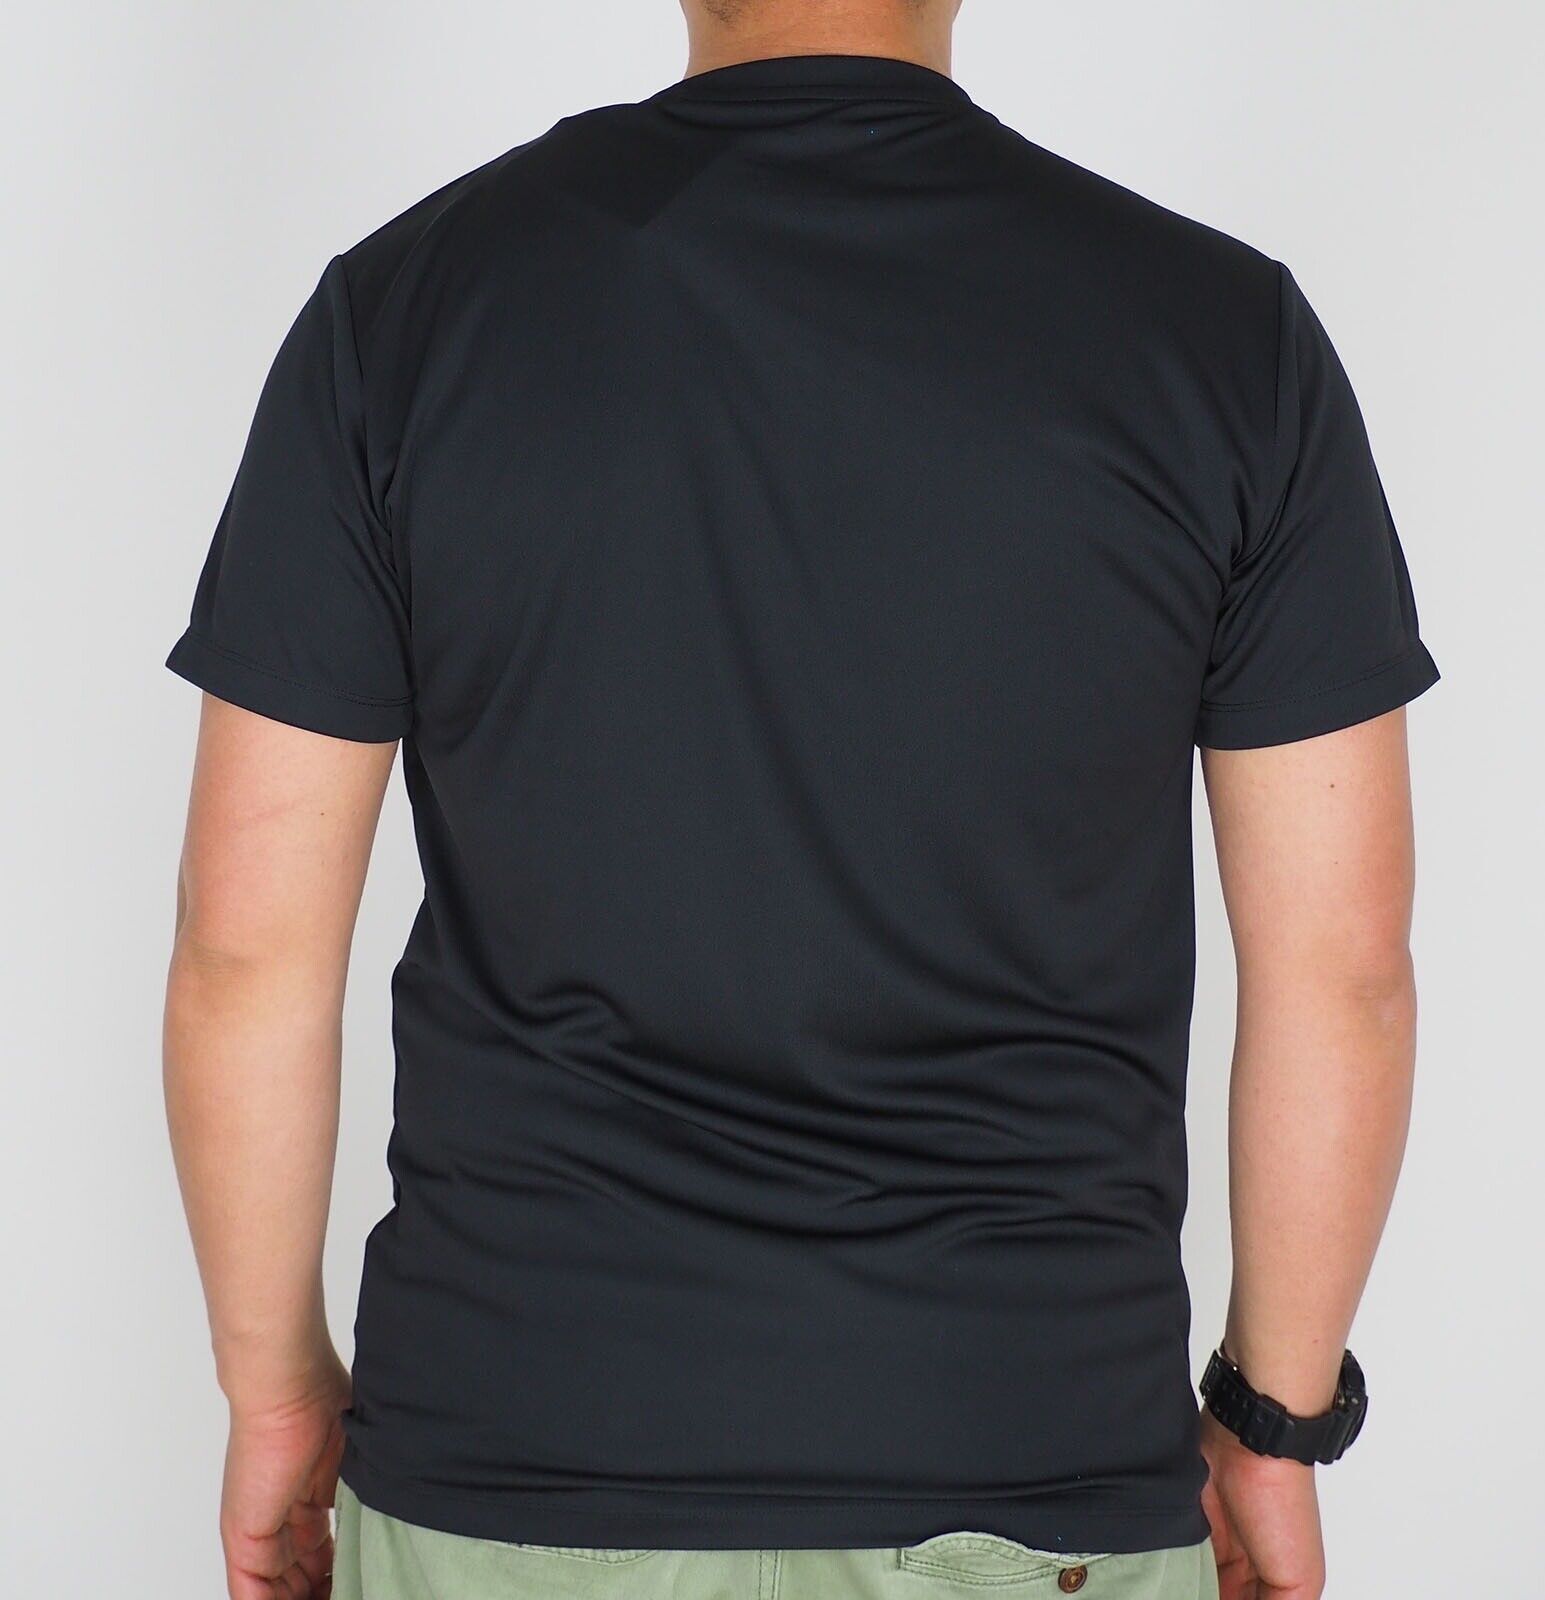 Mens Jack Wolfskin Essential 5011421 Black Basic Casual Short Sleeve T Shirt - London Top Style